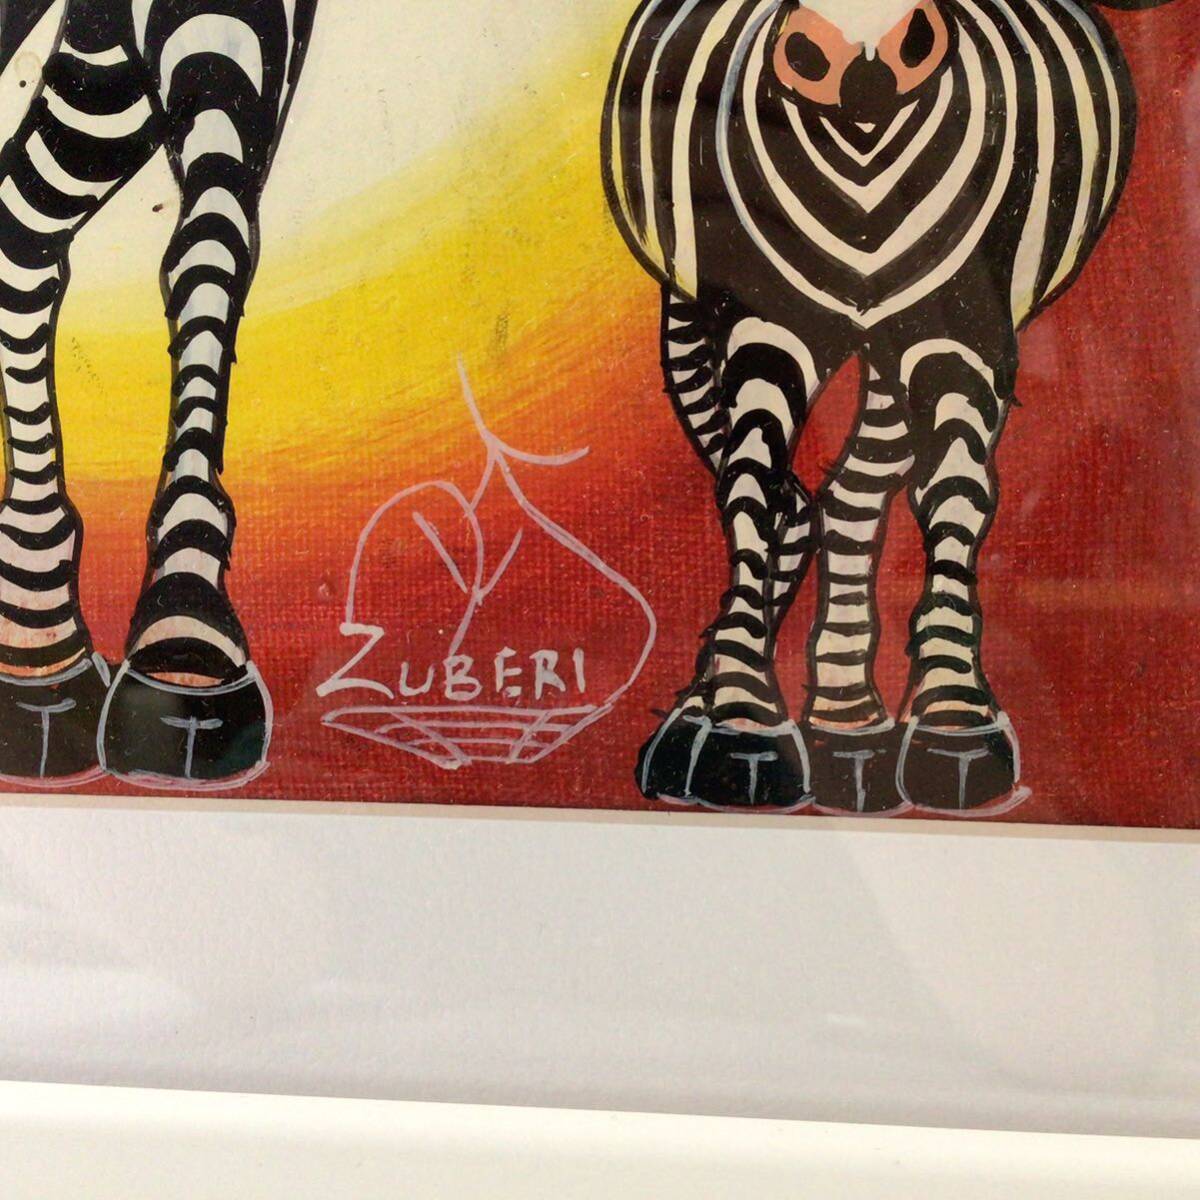 ② genuine work tingatinga Africa picture zebra. family day wheel red 30×30cm TINGATINGA Zuberizbeli Africa n frame na19-13